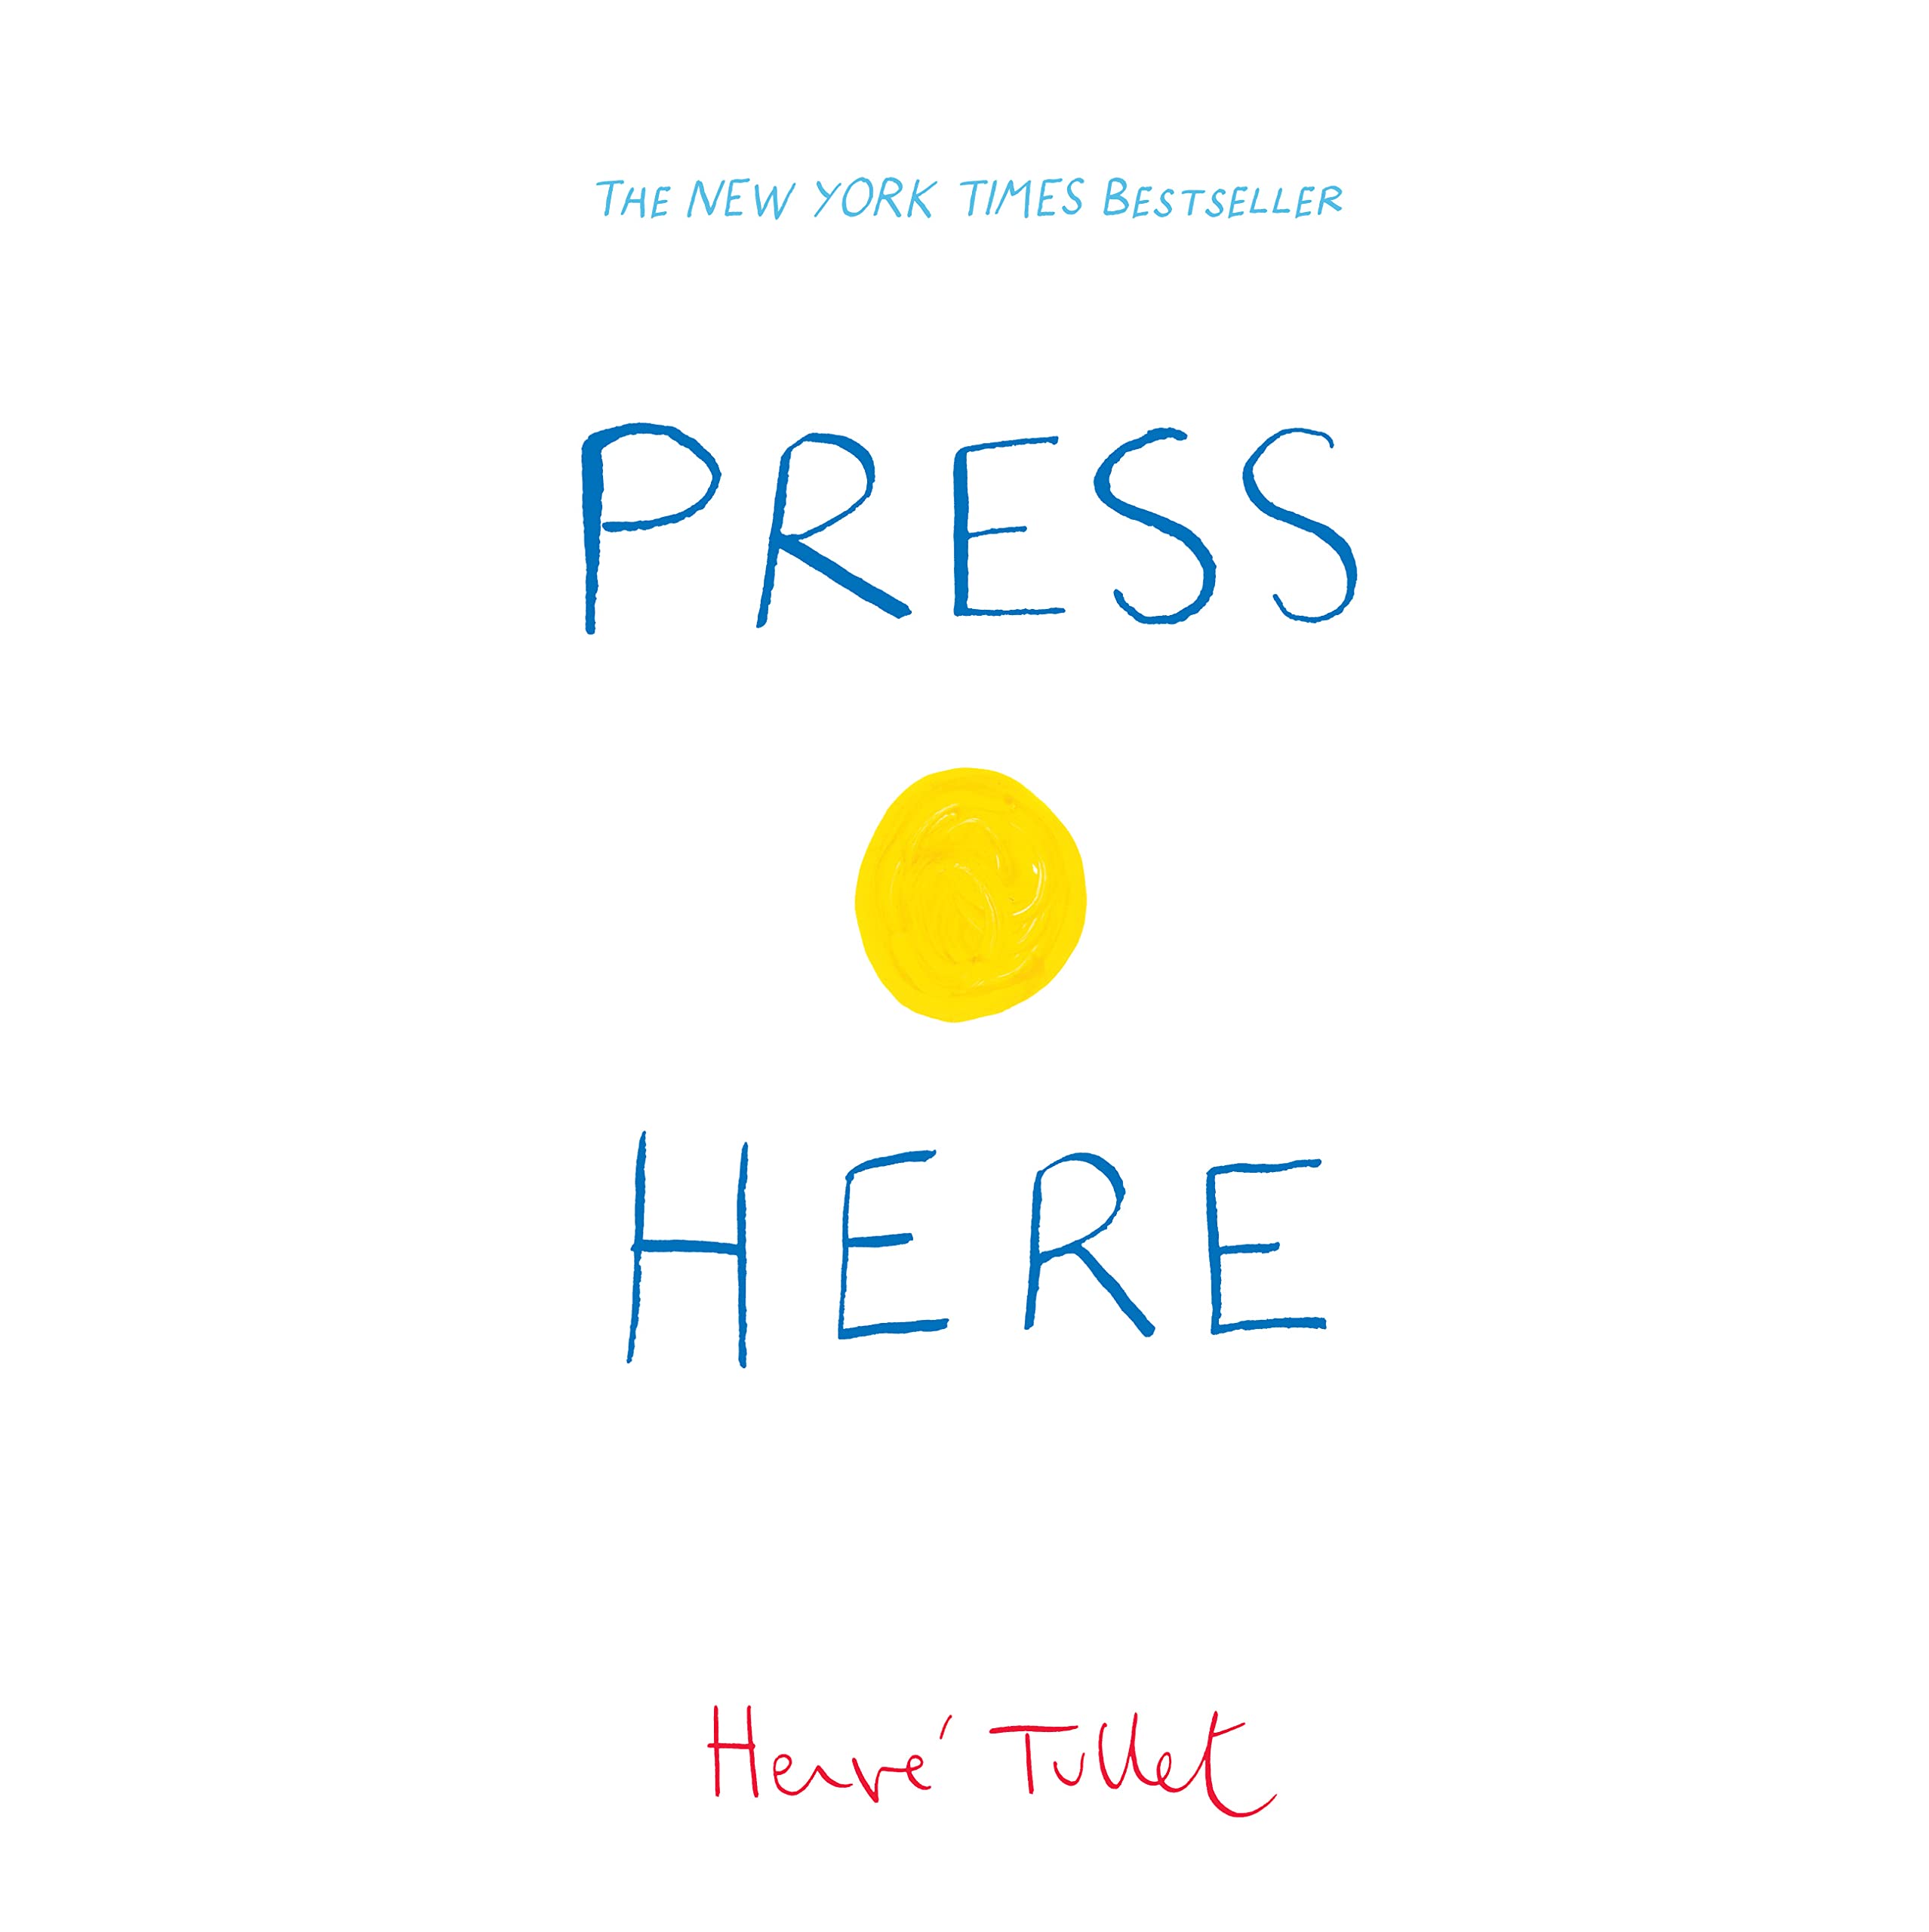 Press Here (Herve Tullet)